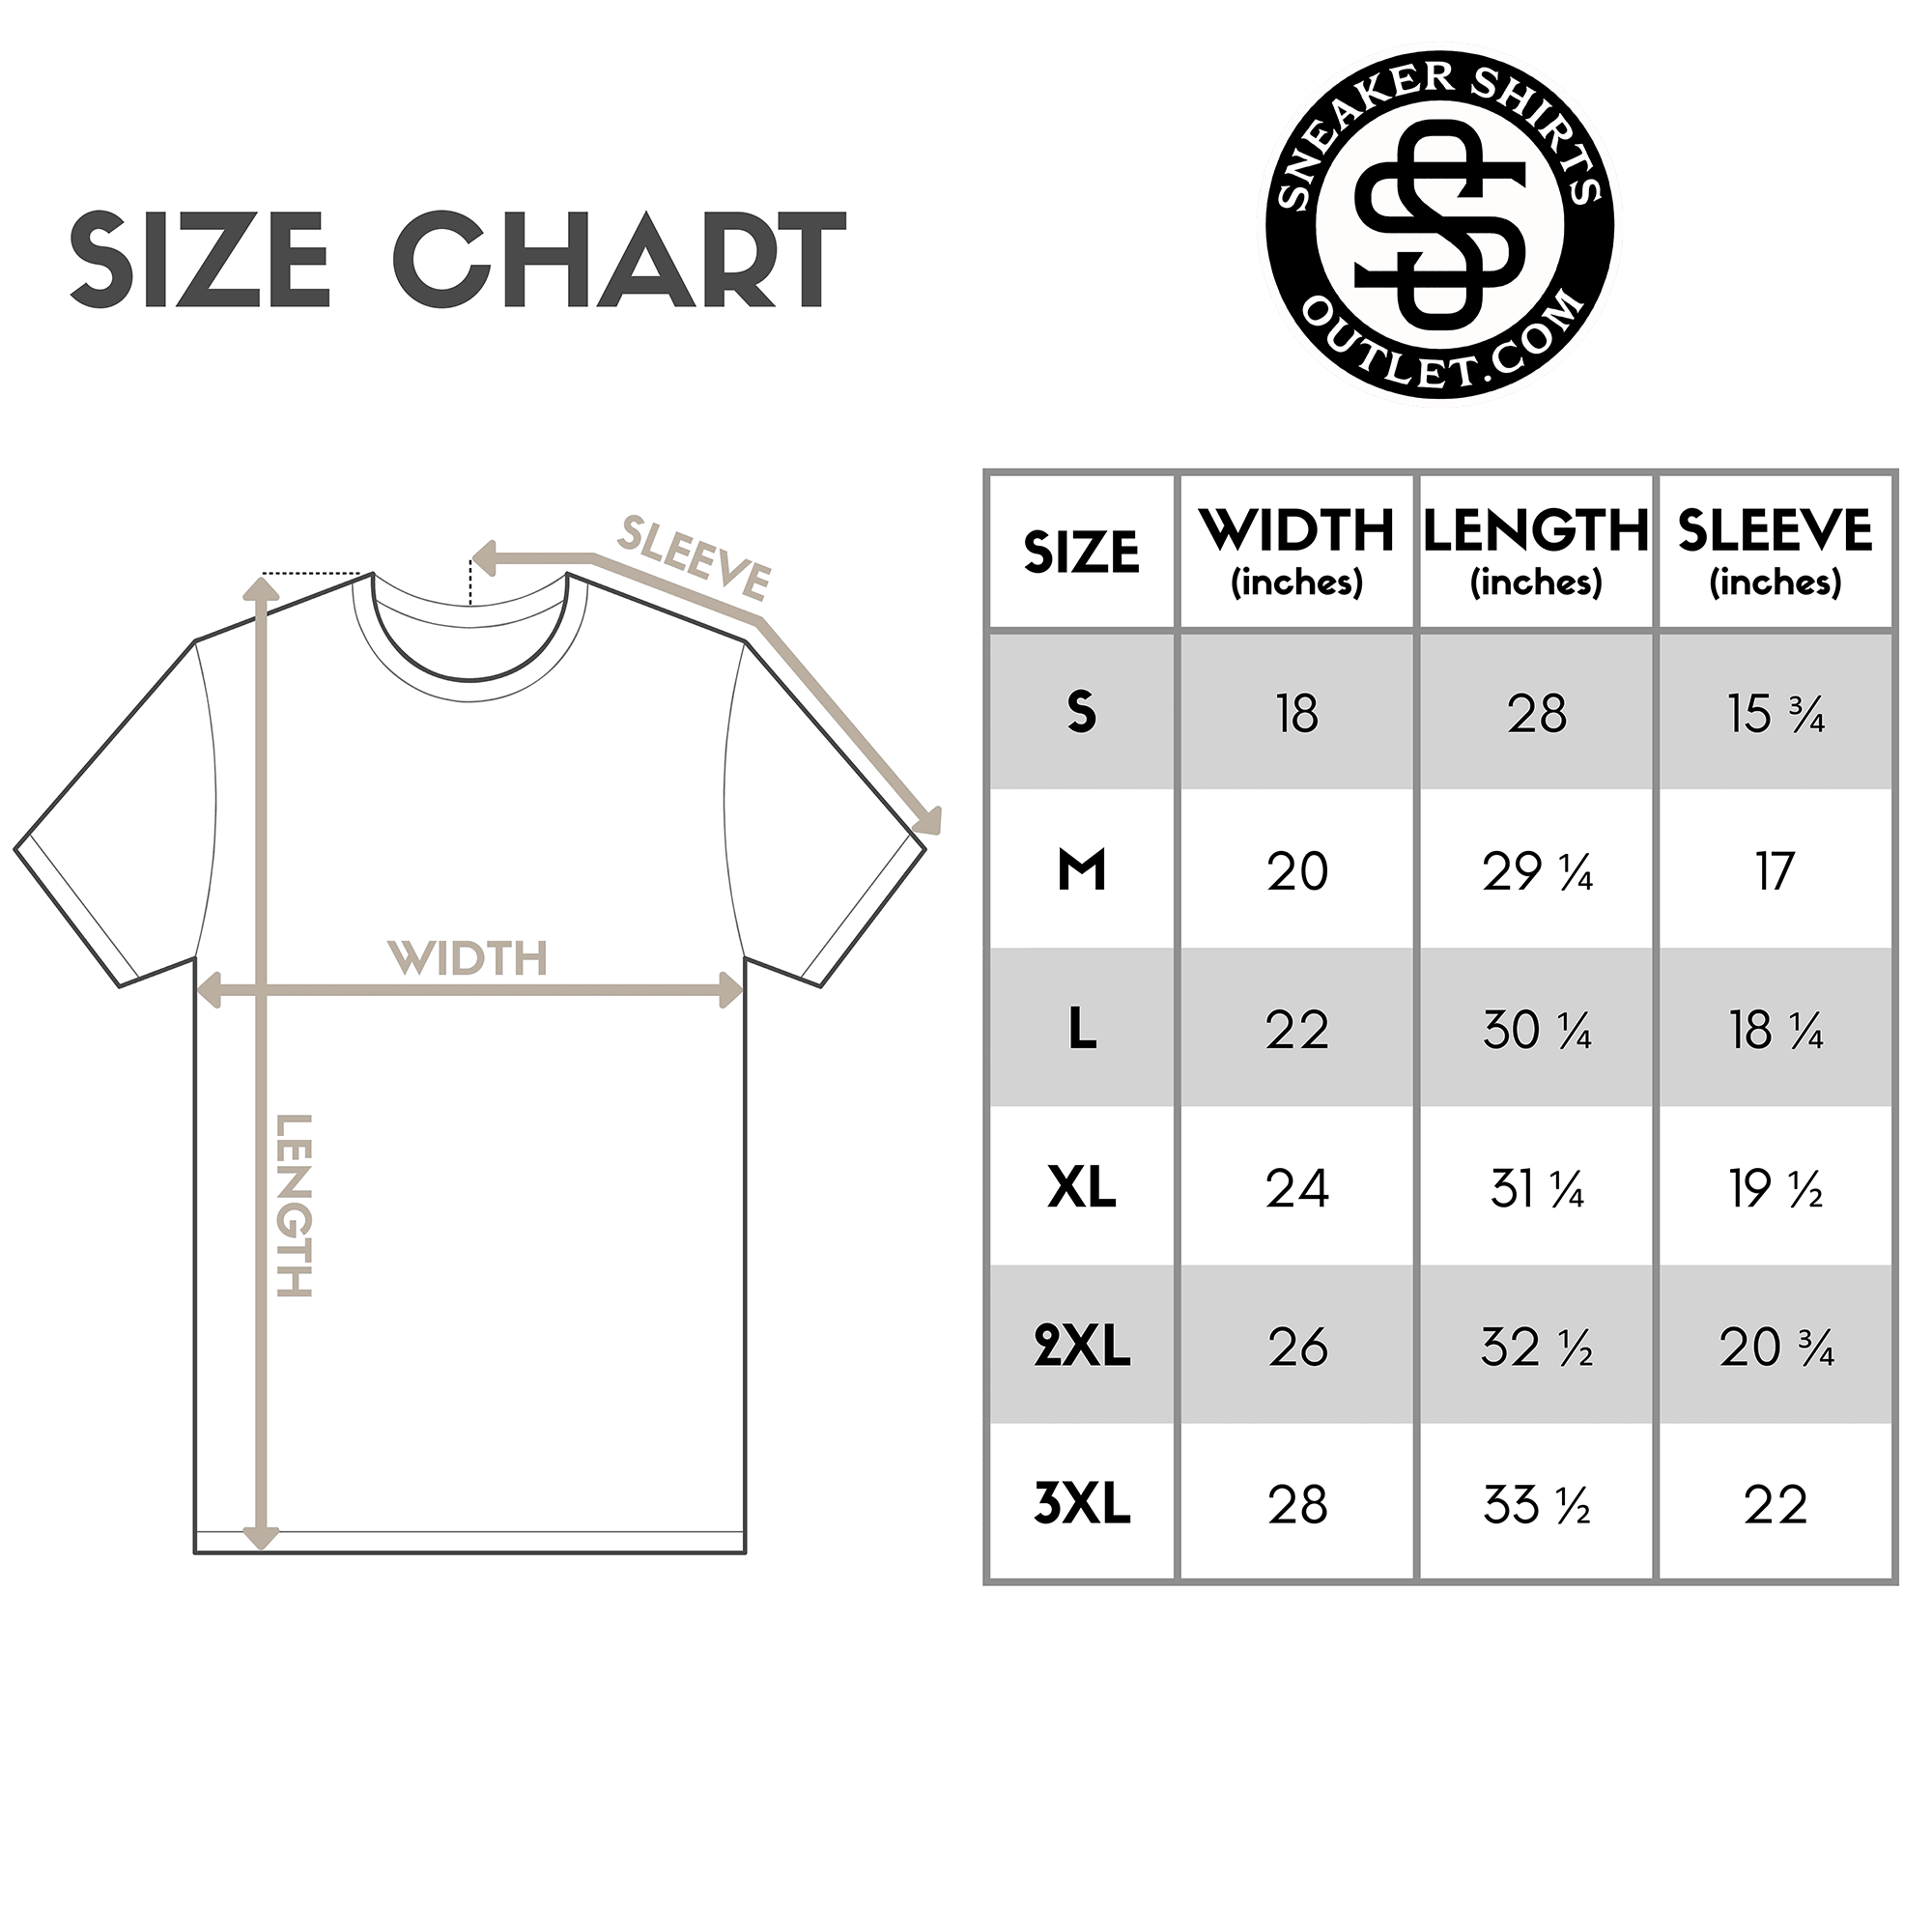 King Sneaker Tee size chart photo